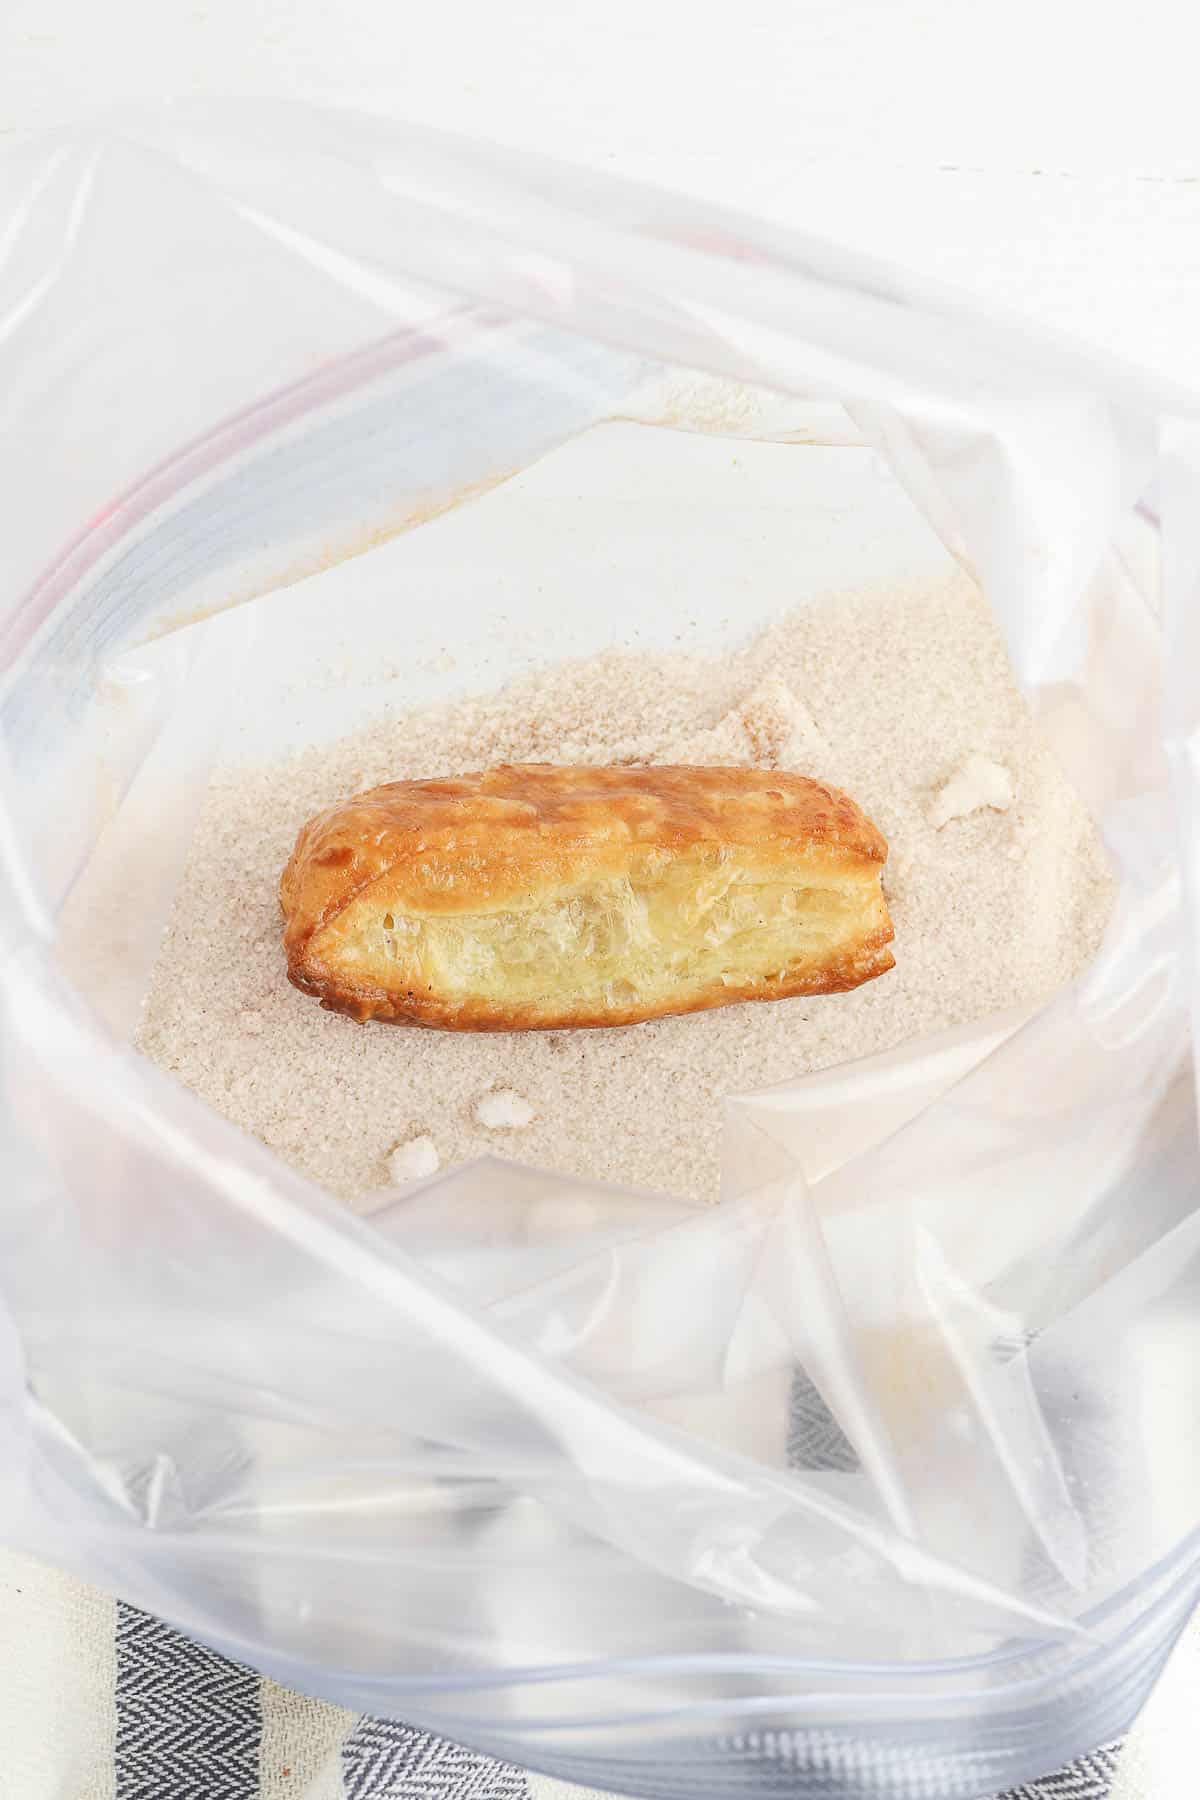 plastic baggie of cinnamon sugar mixture with a churro inside.